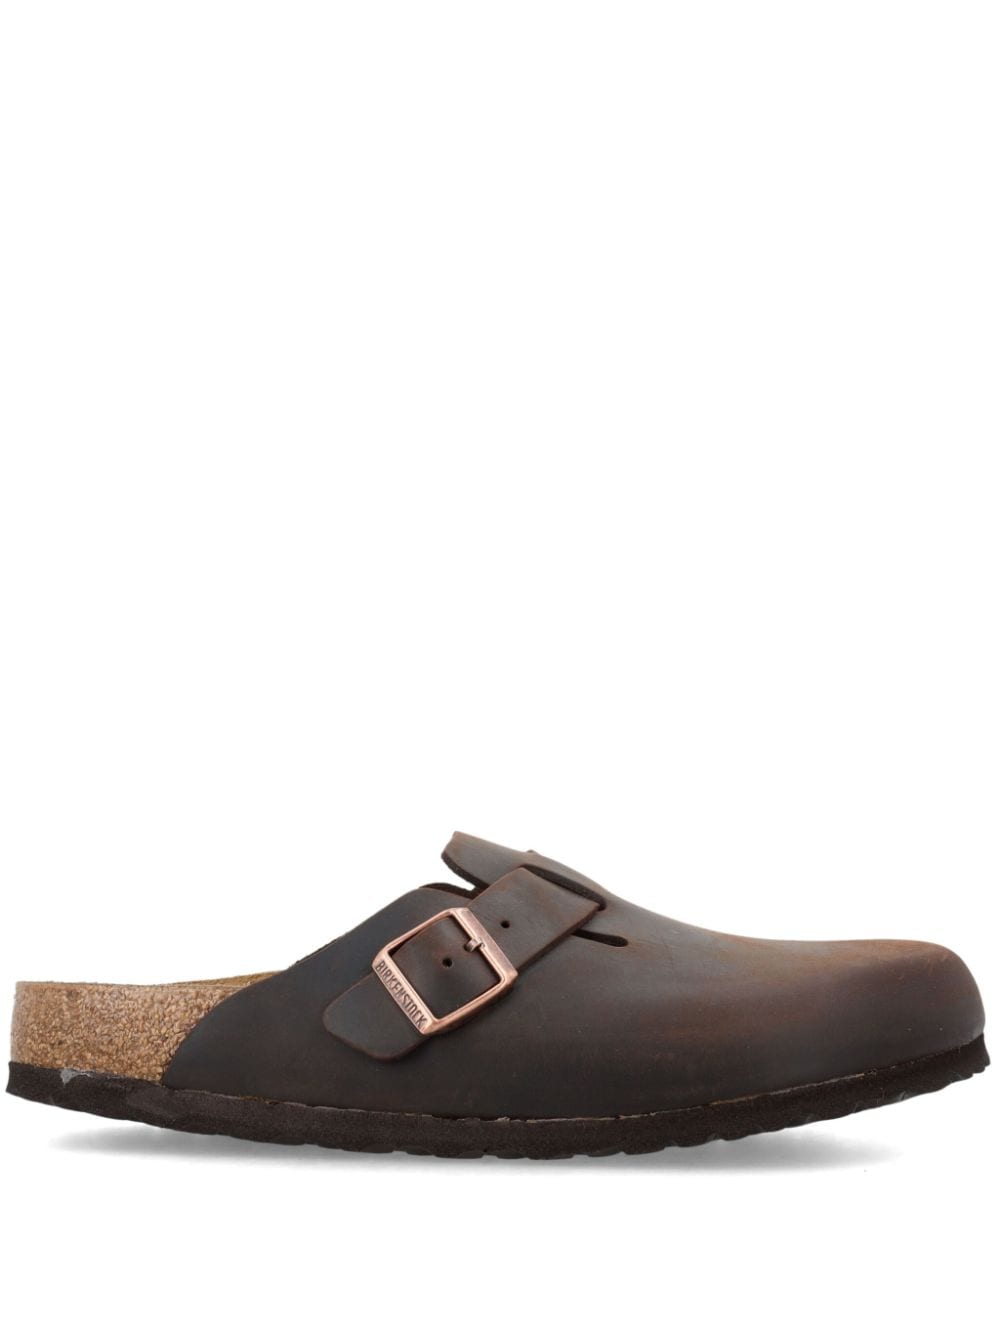 Birkenstock Boston Leather Sandals In Brown